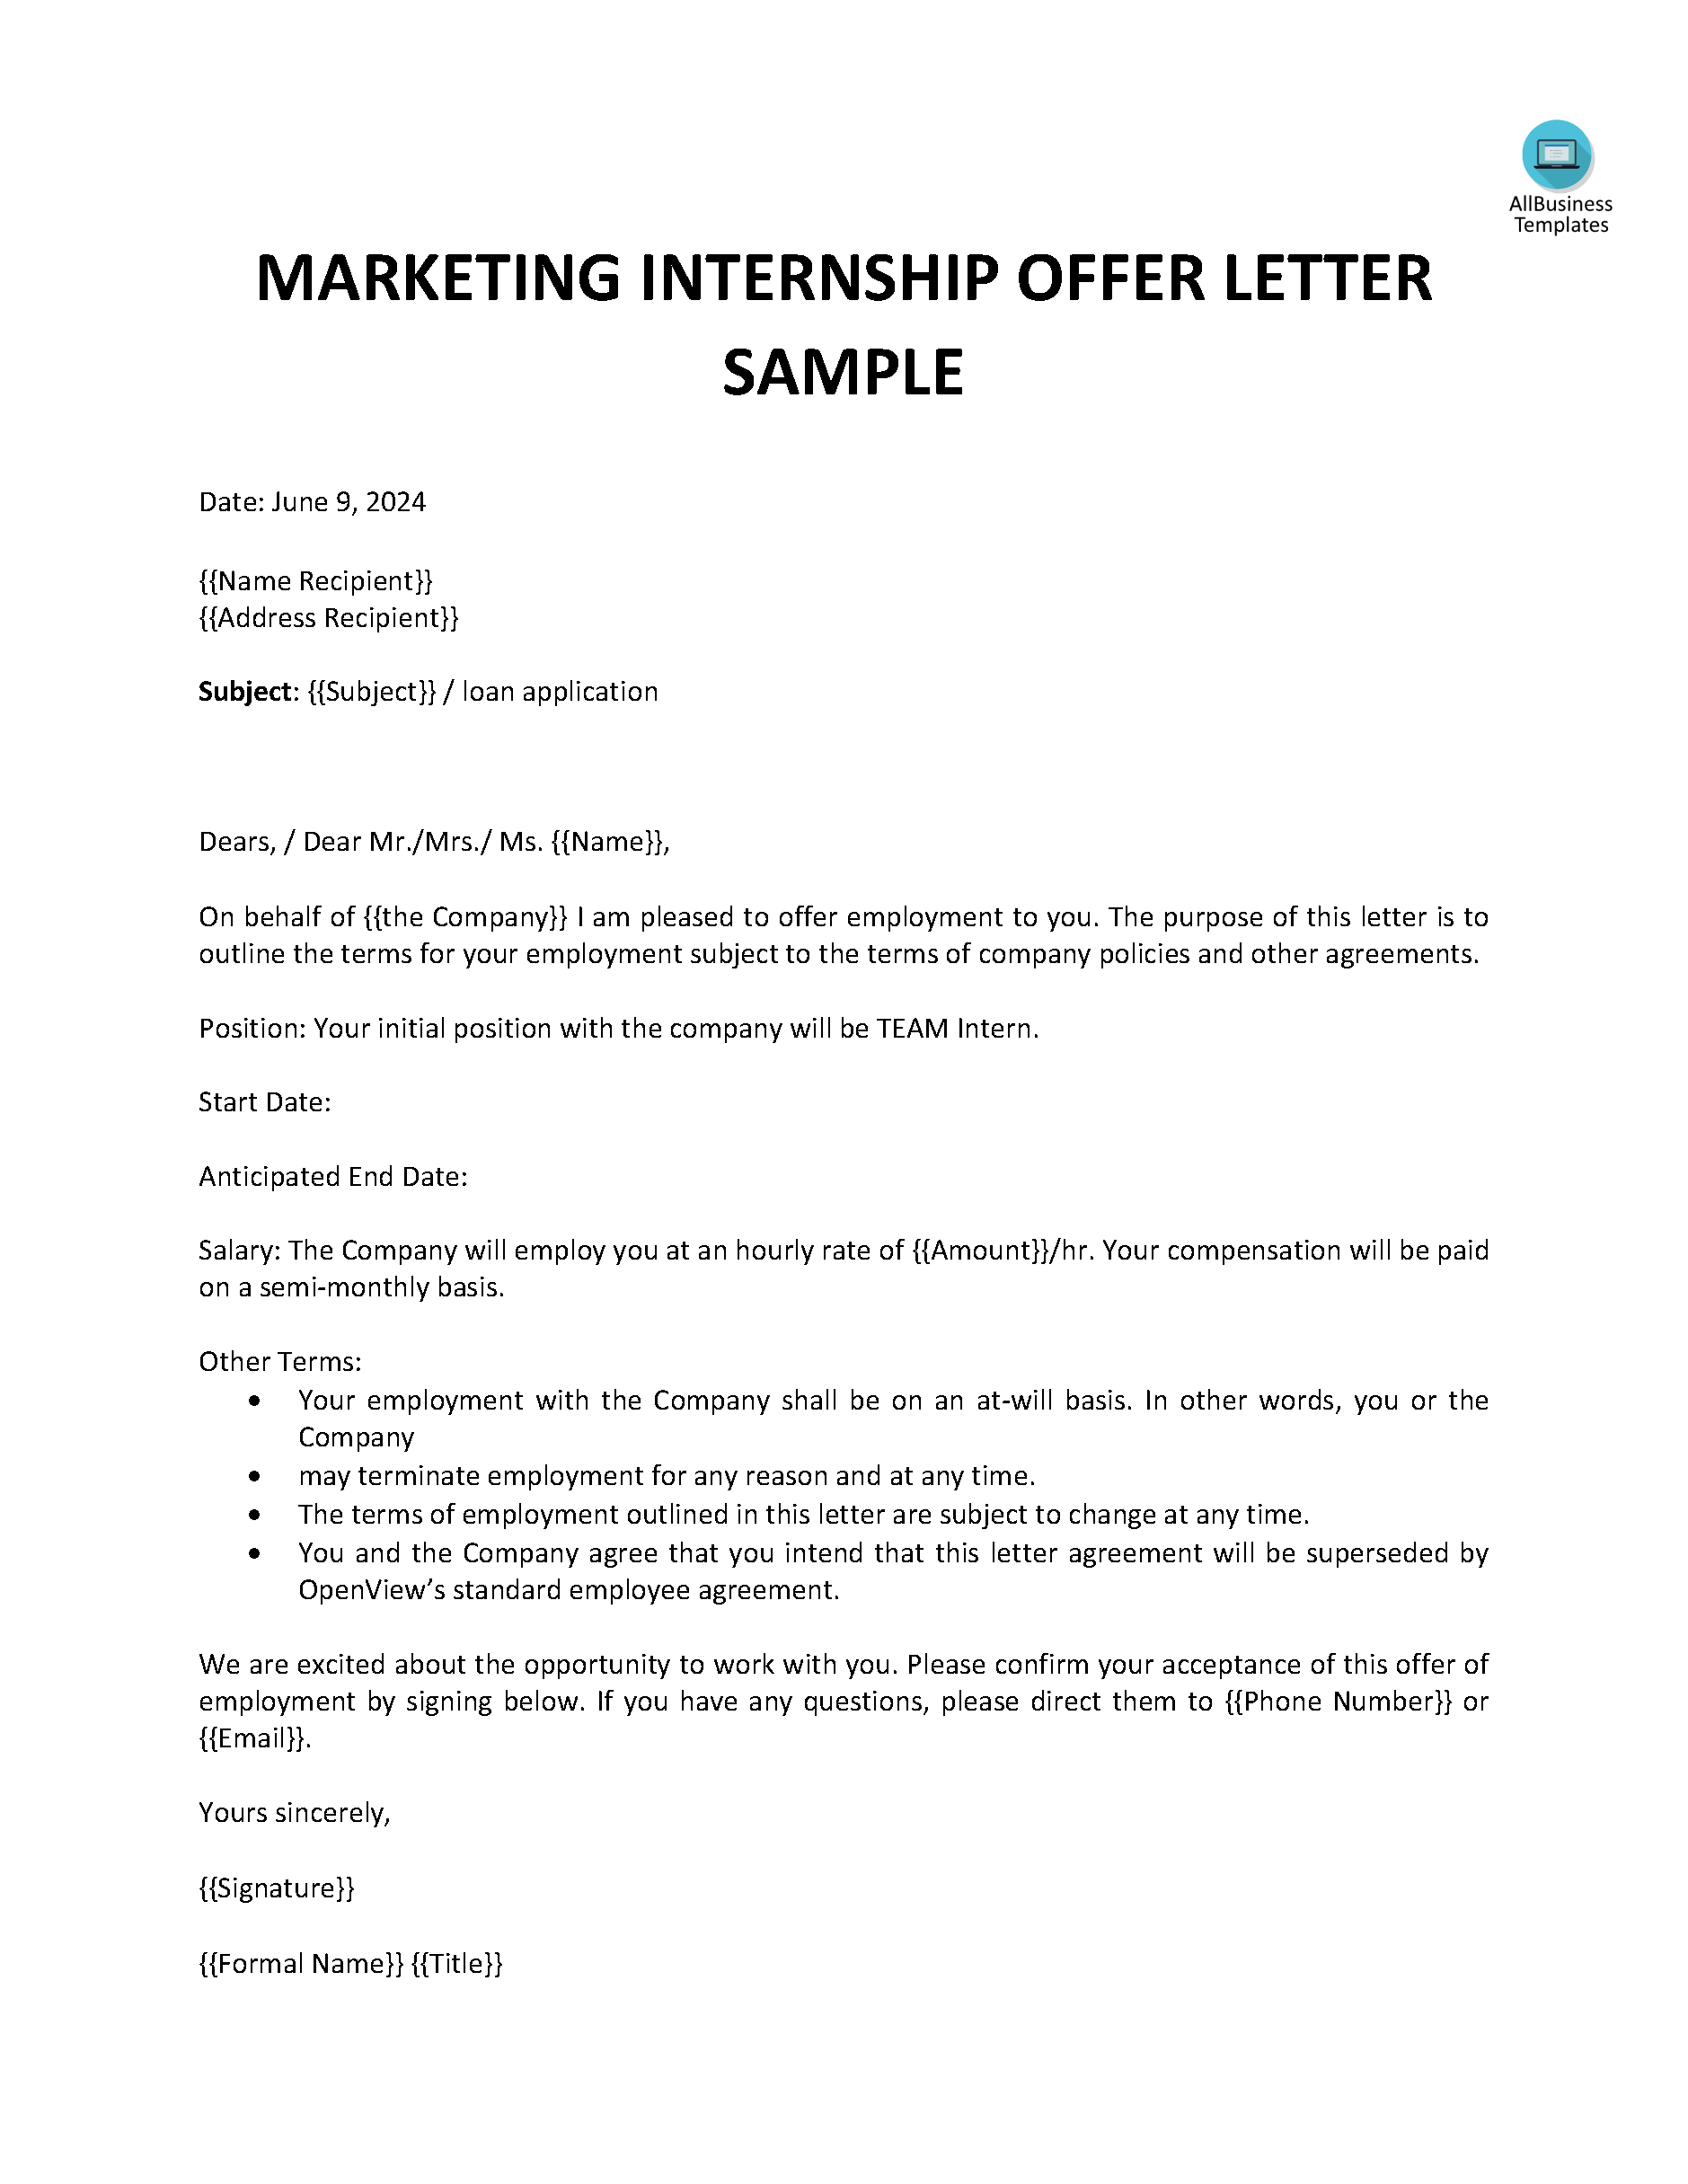 Sample Marketing Internship Offer Letter 模板